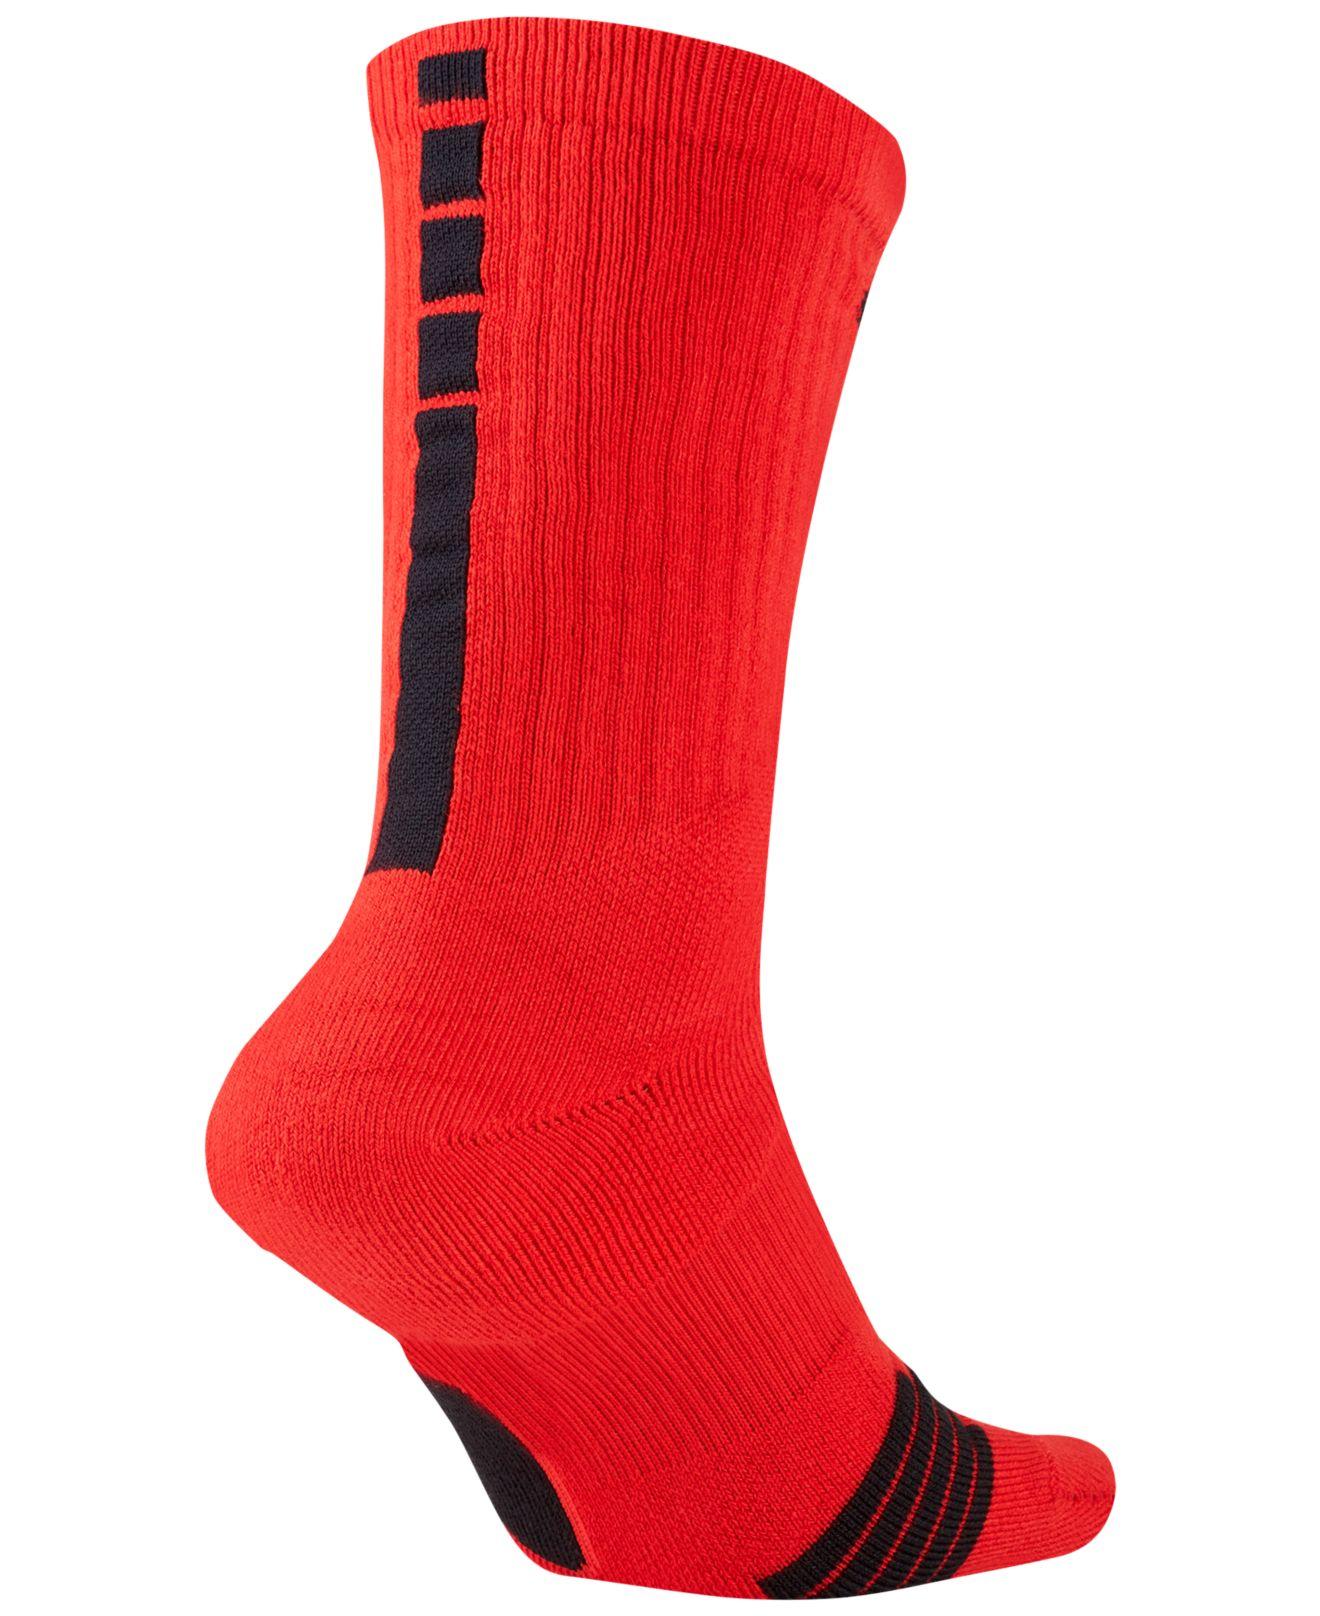 Nike Cotton Elite Basketball Crew Socks in University Red/Black (Red ...